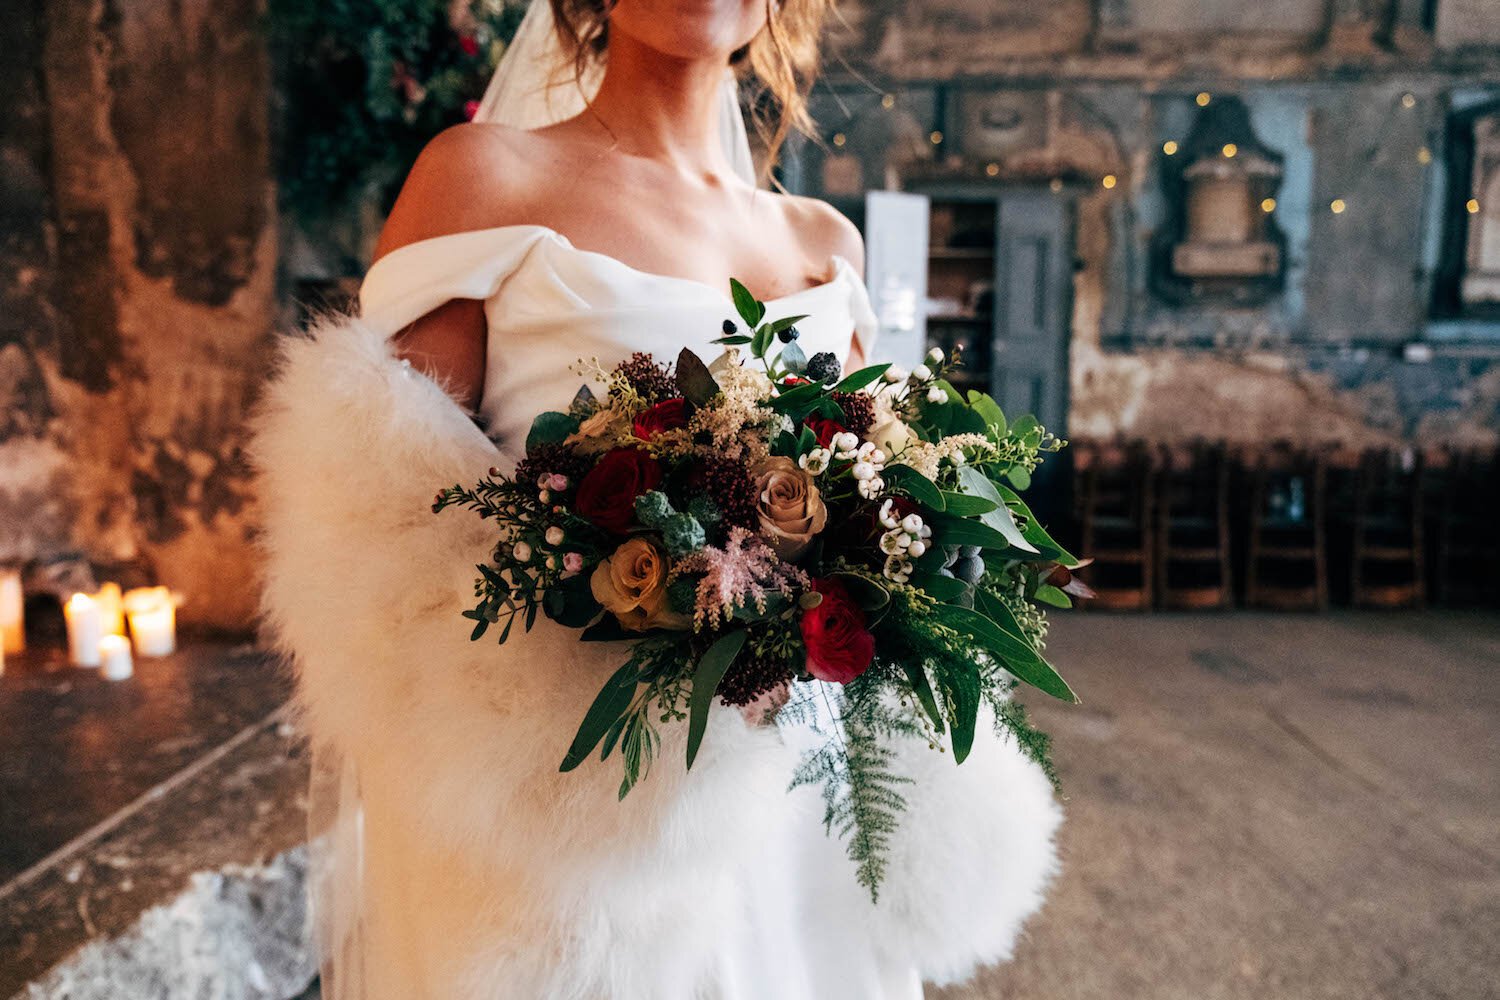 Beautiful bride Flo wore a wedding dress by Halfpenny London